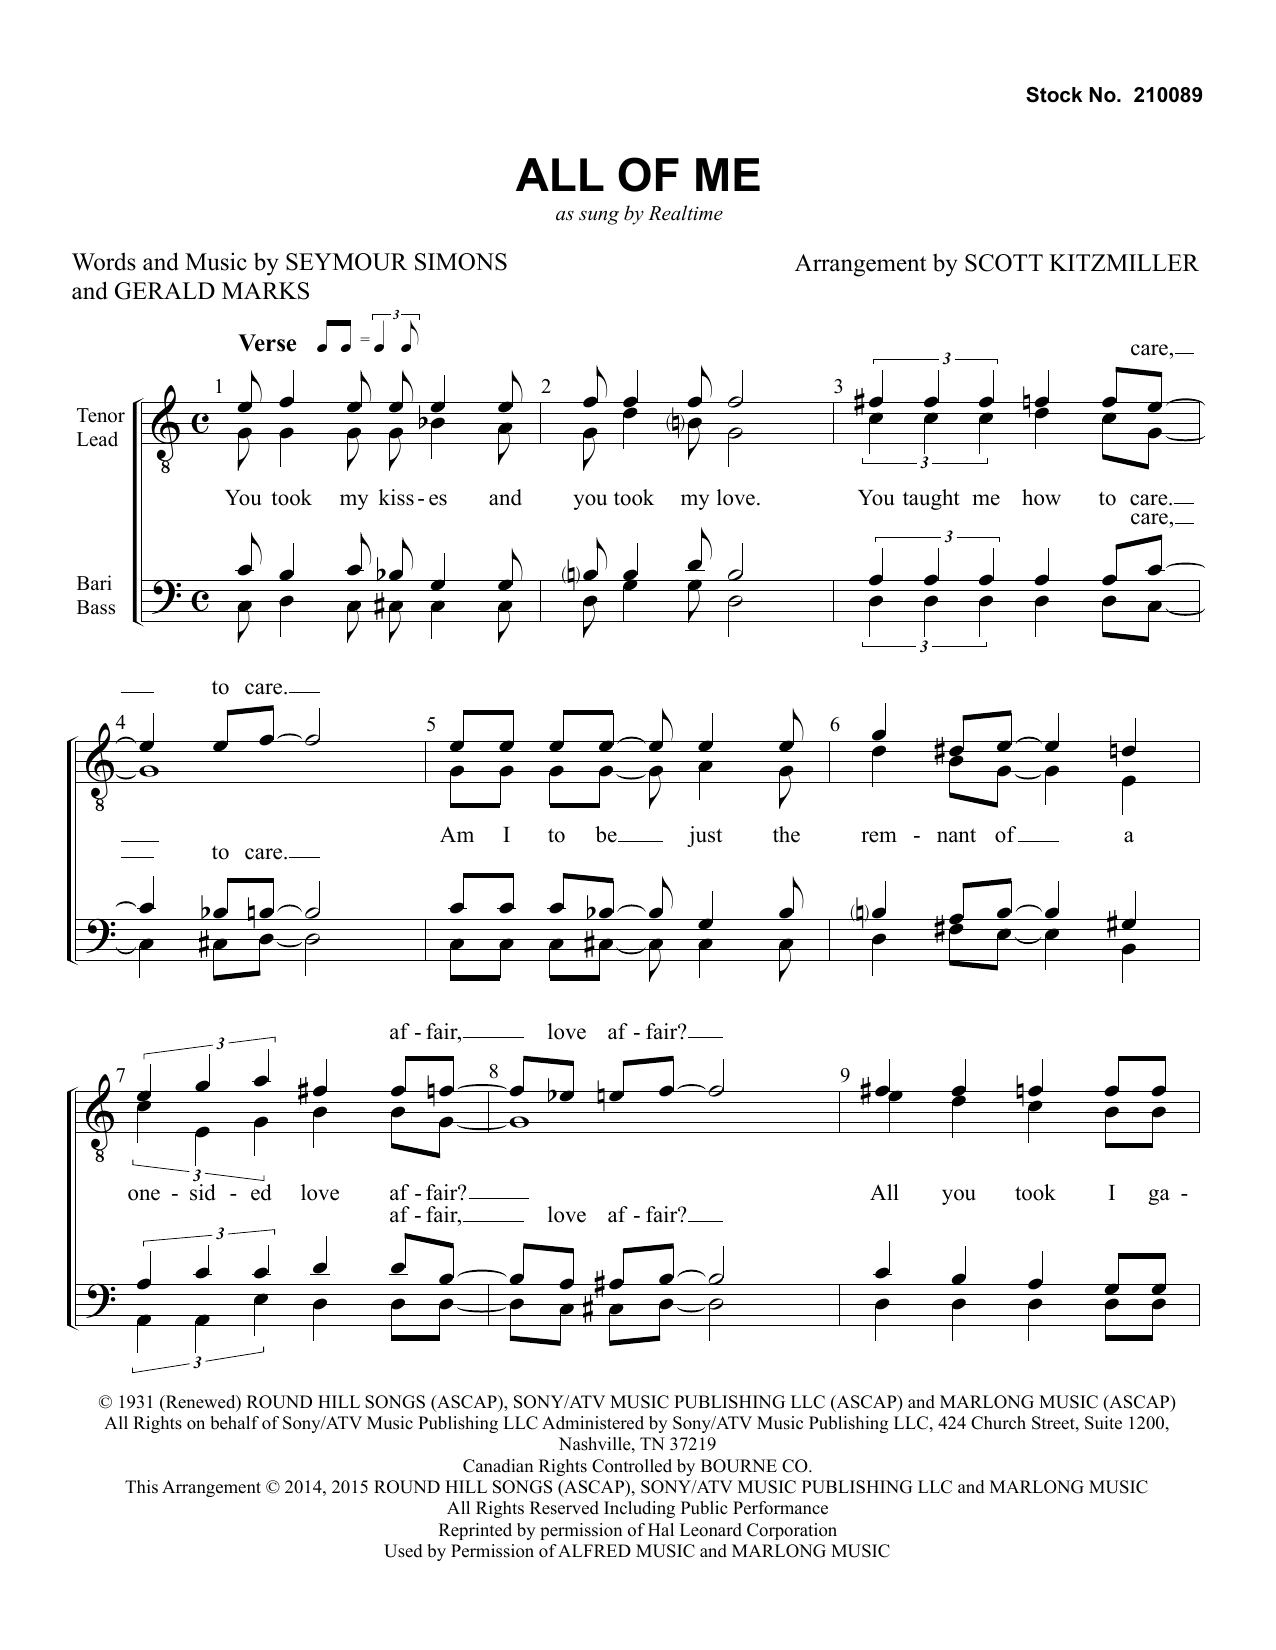 Realtime All Of Me (arr. Scott Kitzmiller) Sheet Music Notes & Chords for TTBB Choir - Download or Print PDF